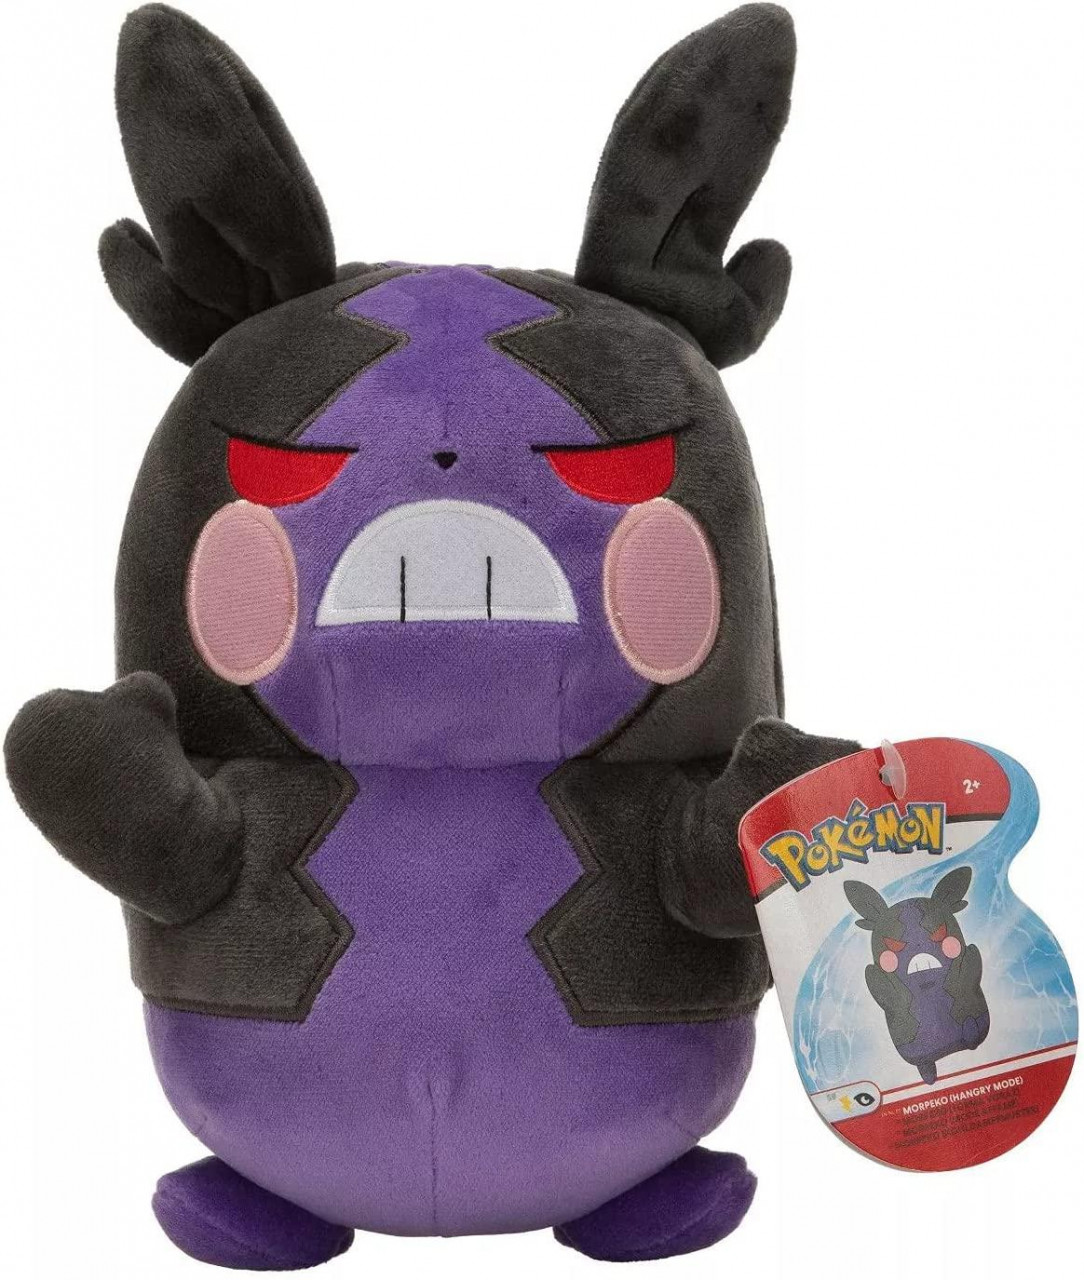 Morpeko (Heißhunger) - Pokémon Plüschfigur (20cm)